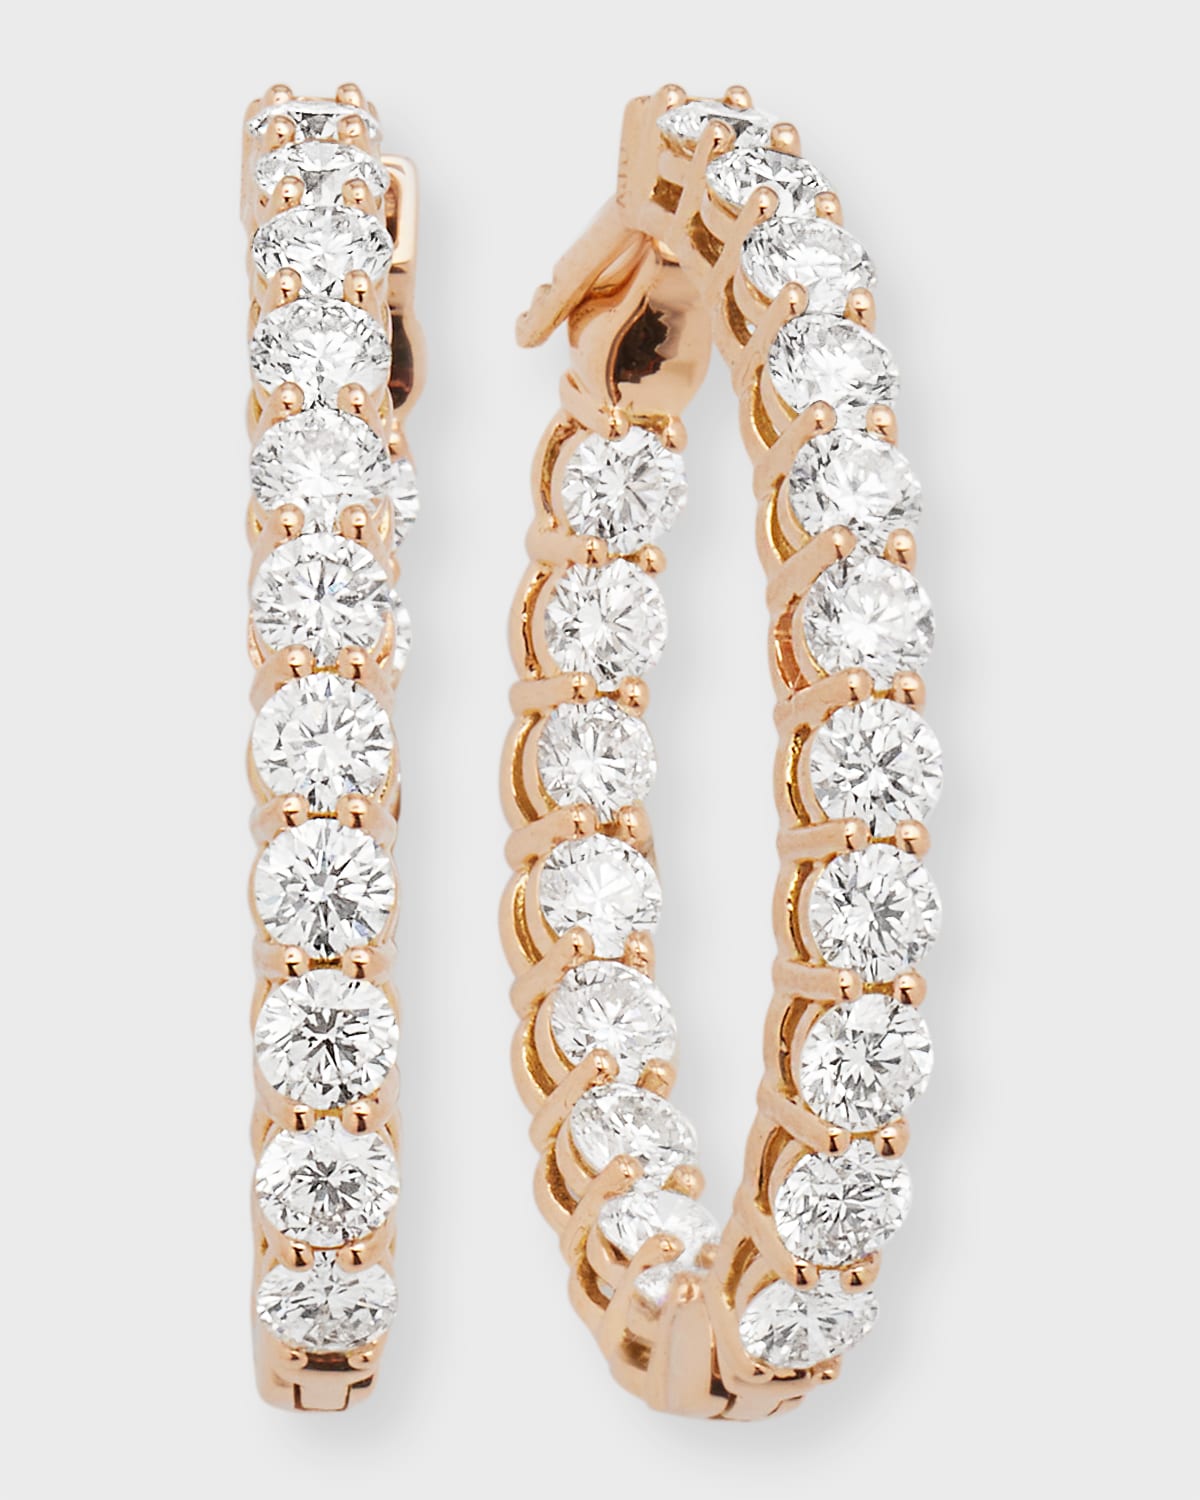 NM Diamond Collection Large Diamond Hoop Earrings in 18K Rose Gold